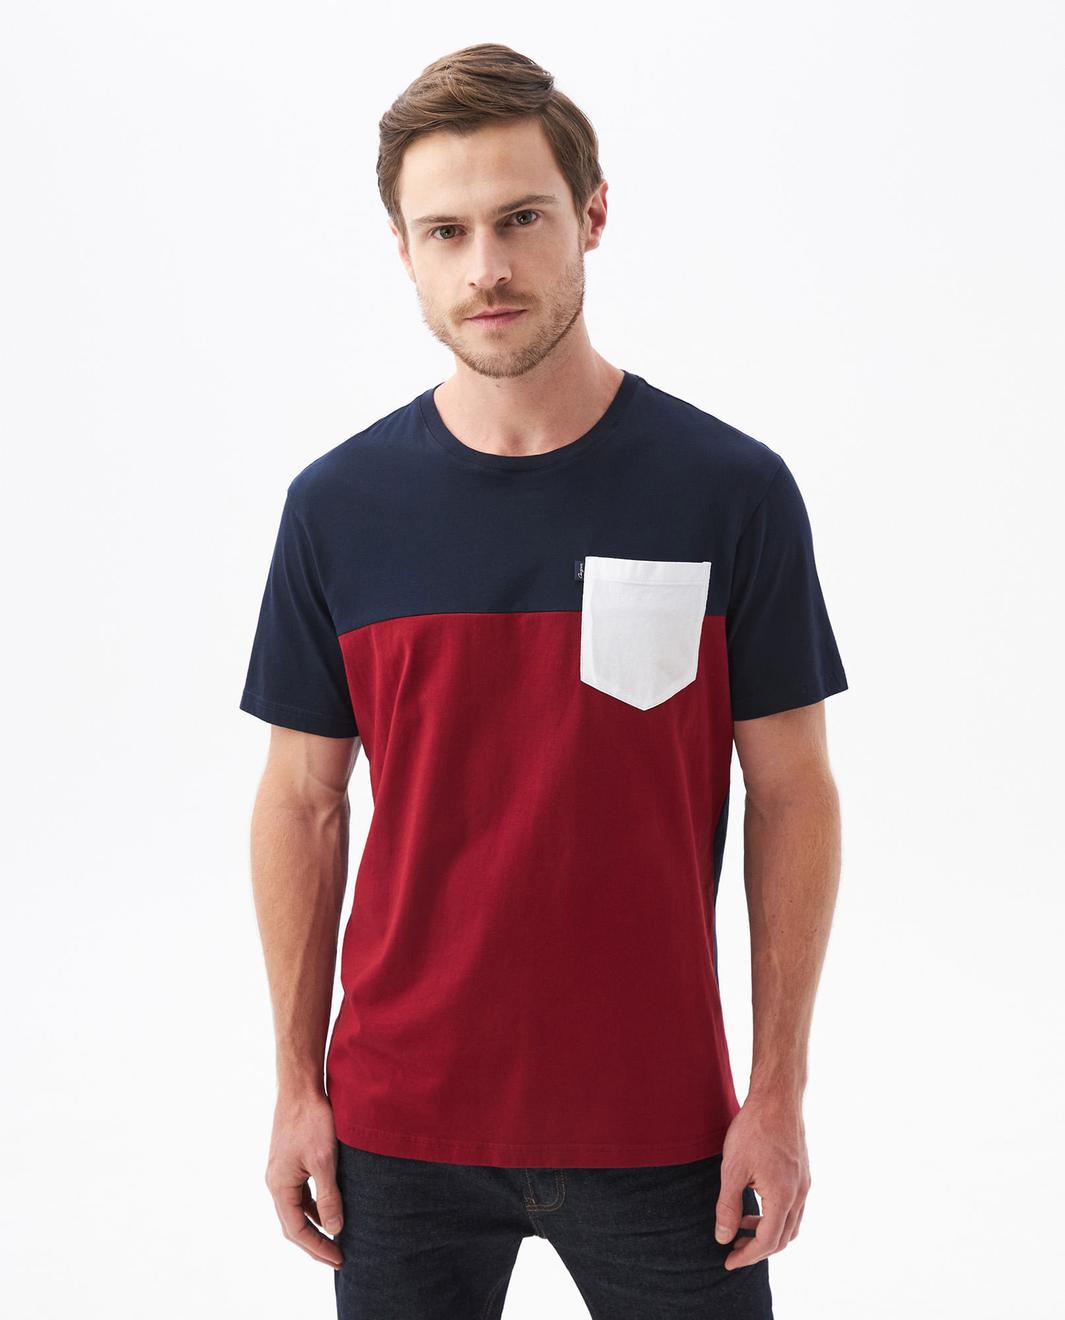 Oferta de Camiseta de Hombre, Classic Fit Cuello Redondo - Bloques de Color + Bolsillo por $95940 en Chevignon